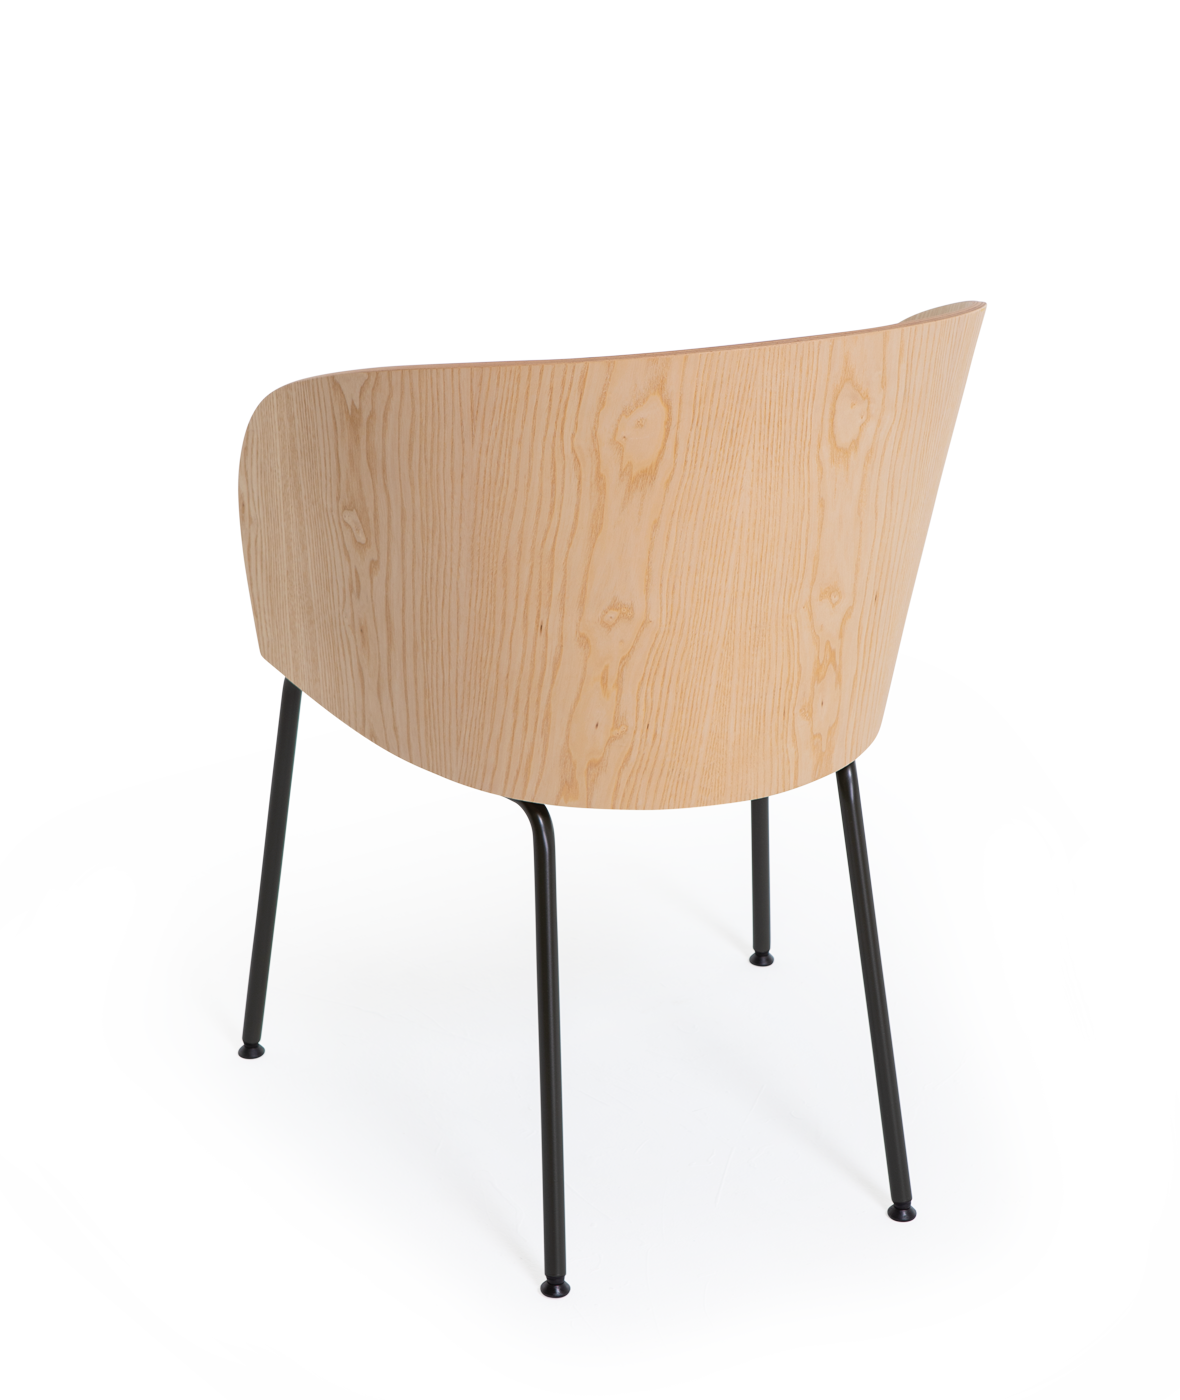 Vergés - Cistell Original chair with armrests and metallic legs